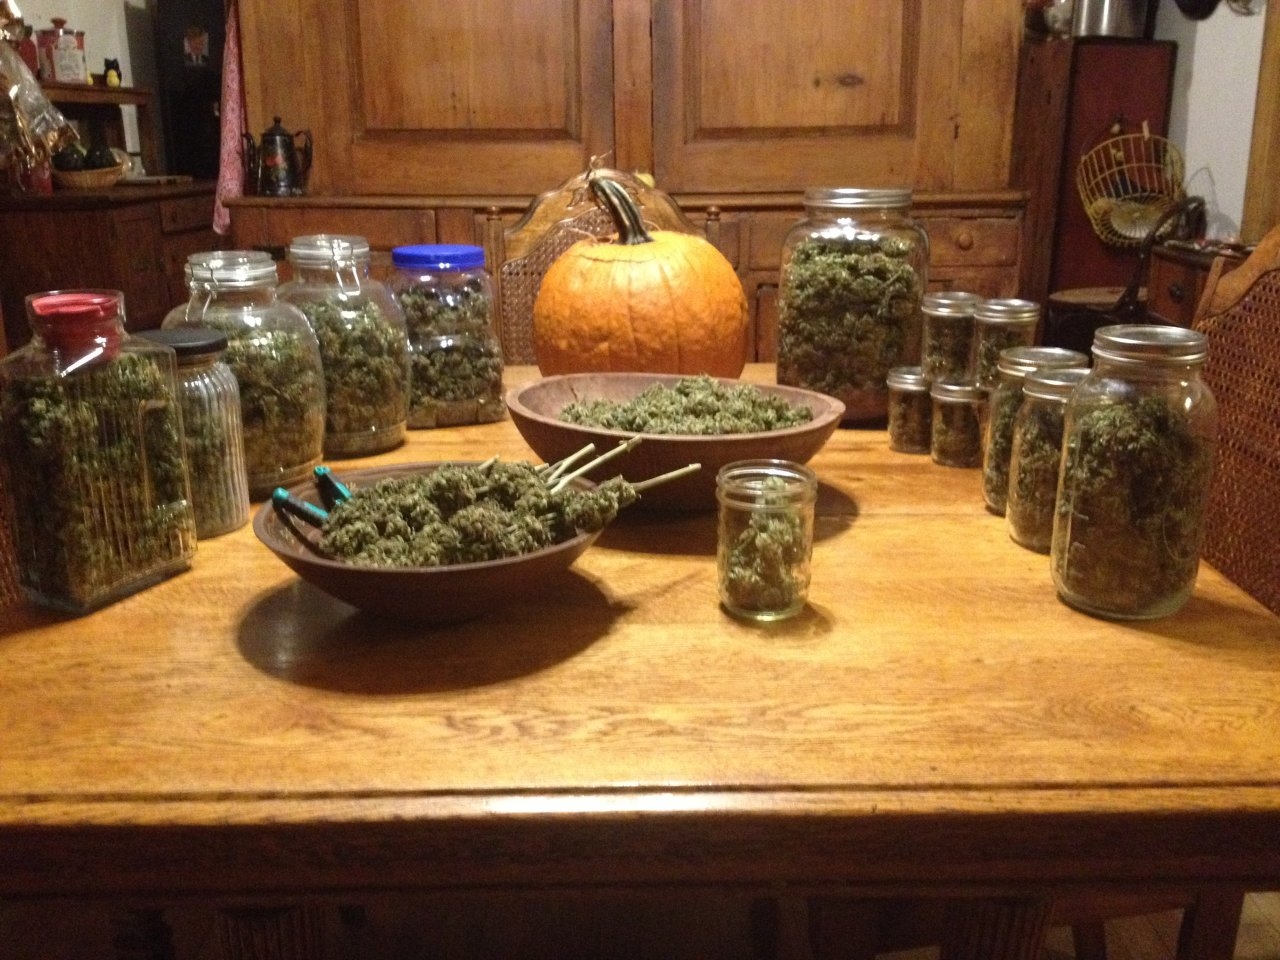 Good old fashioned home grown marijuana!